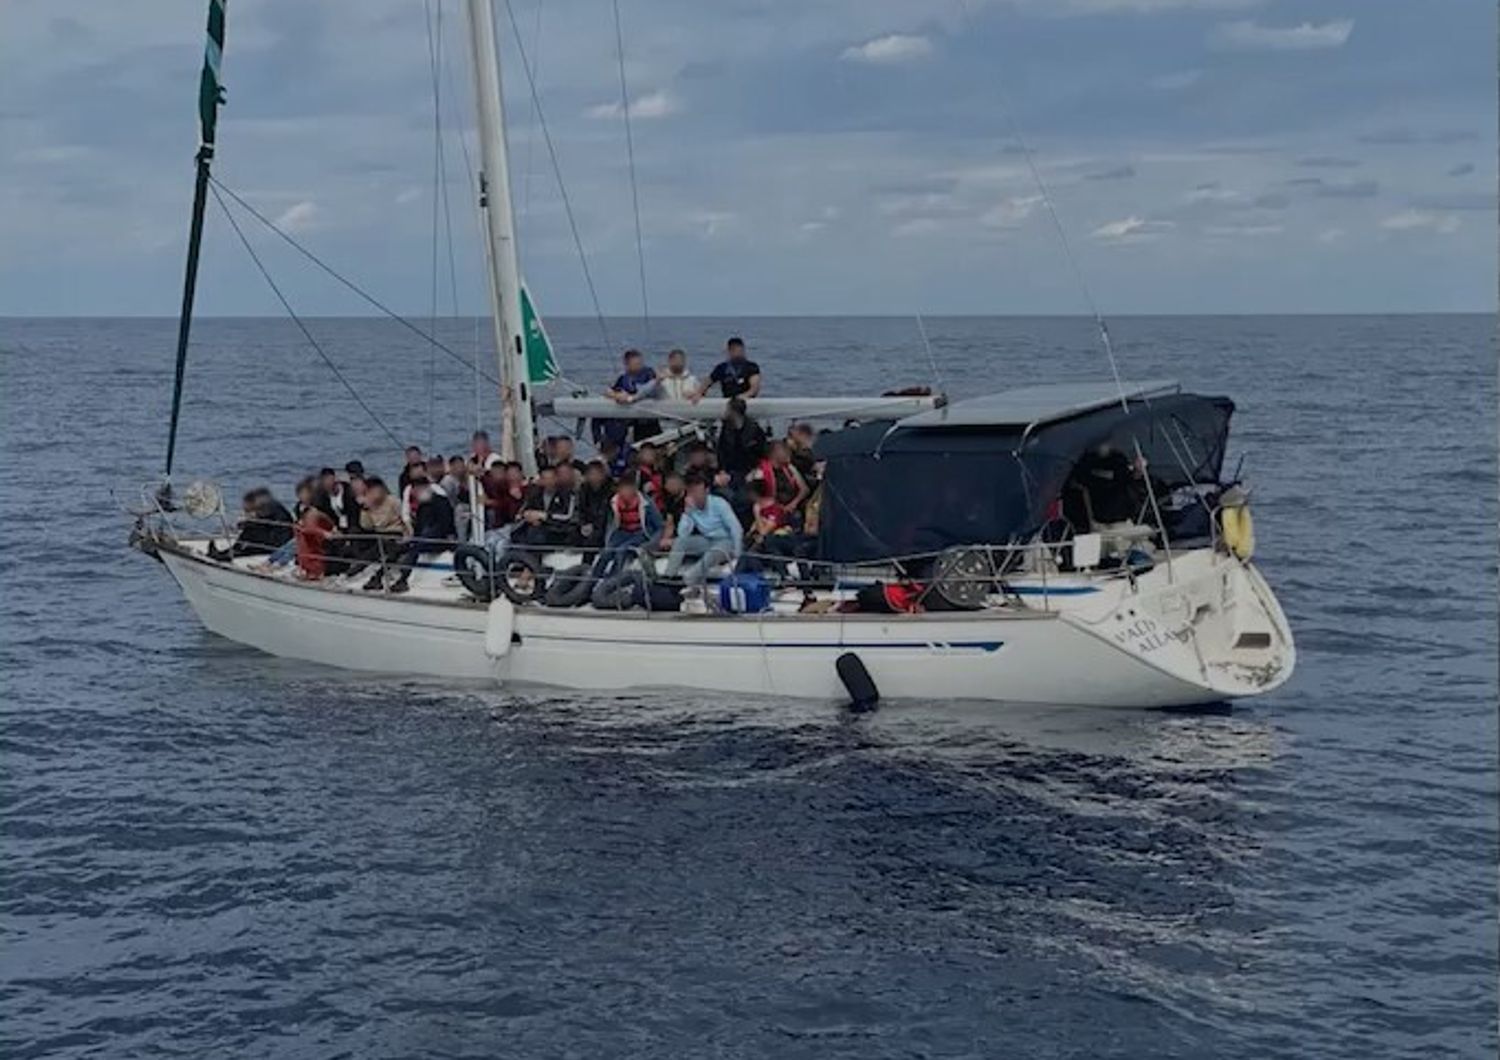 migranti barca vela rotta balcanica arresti